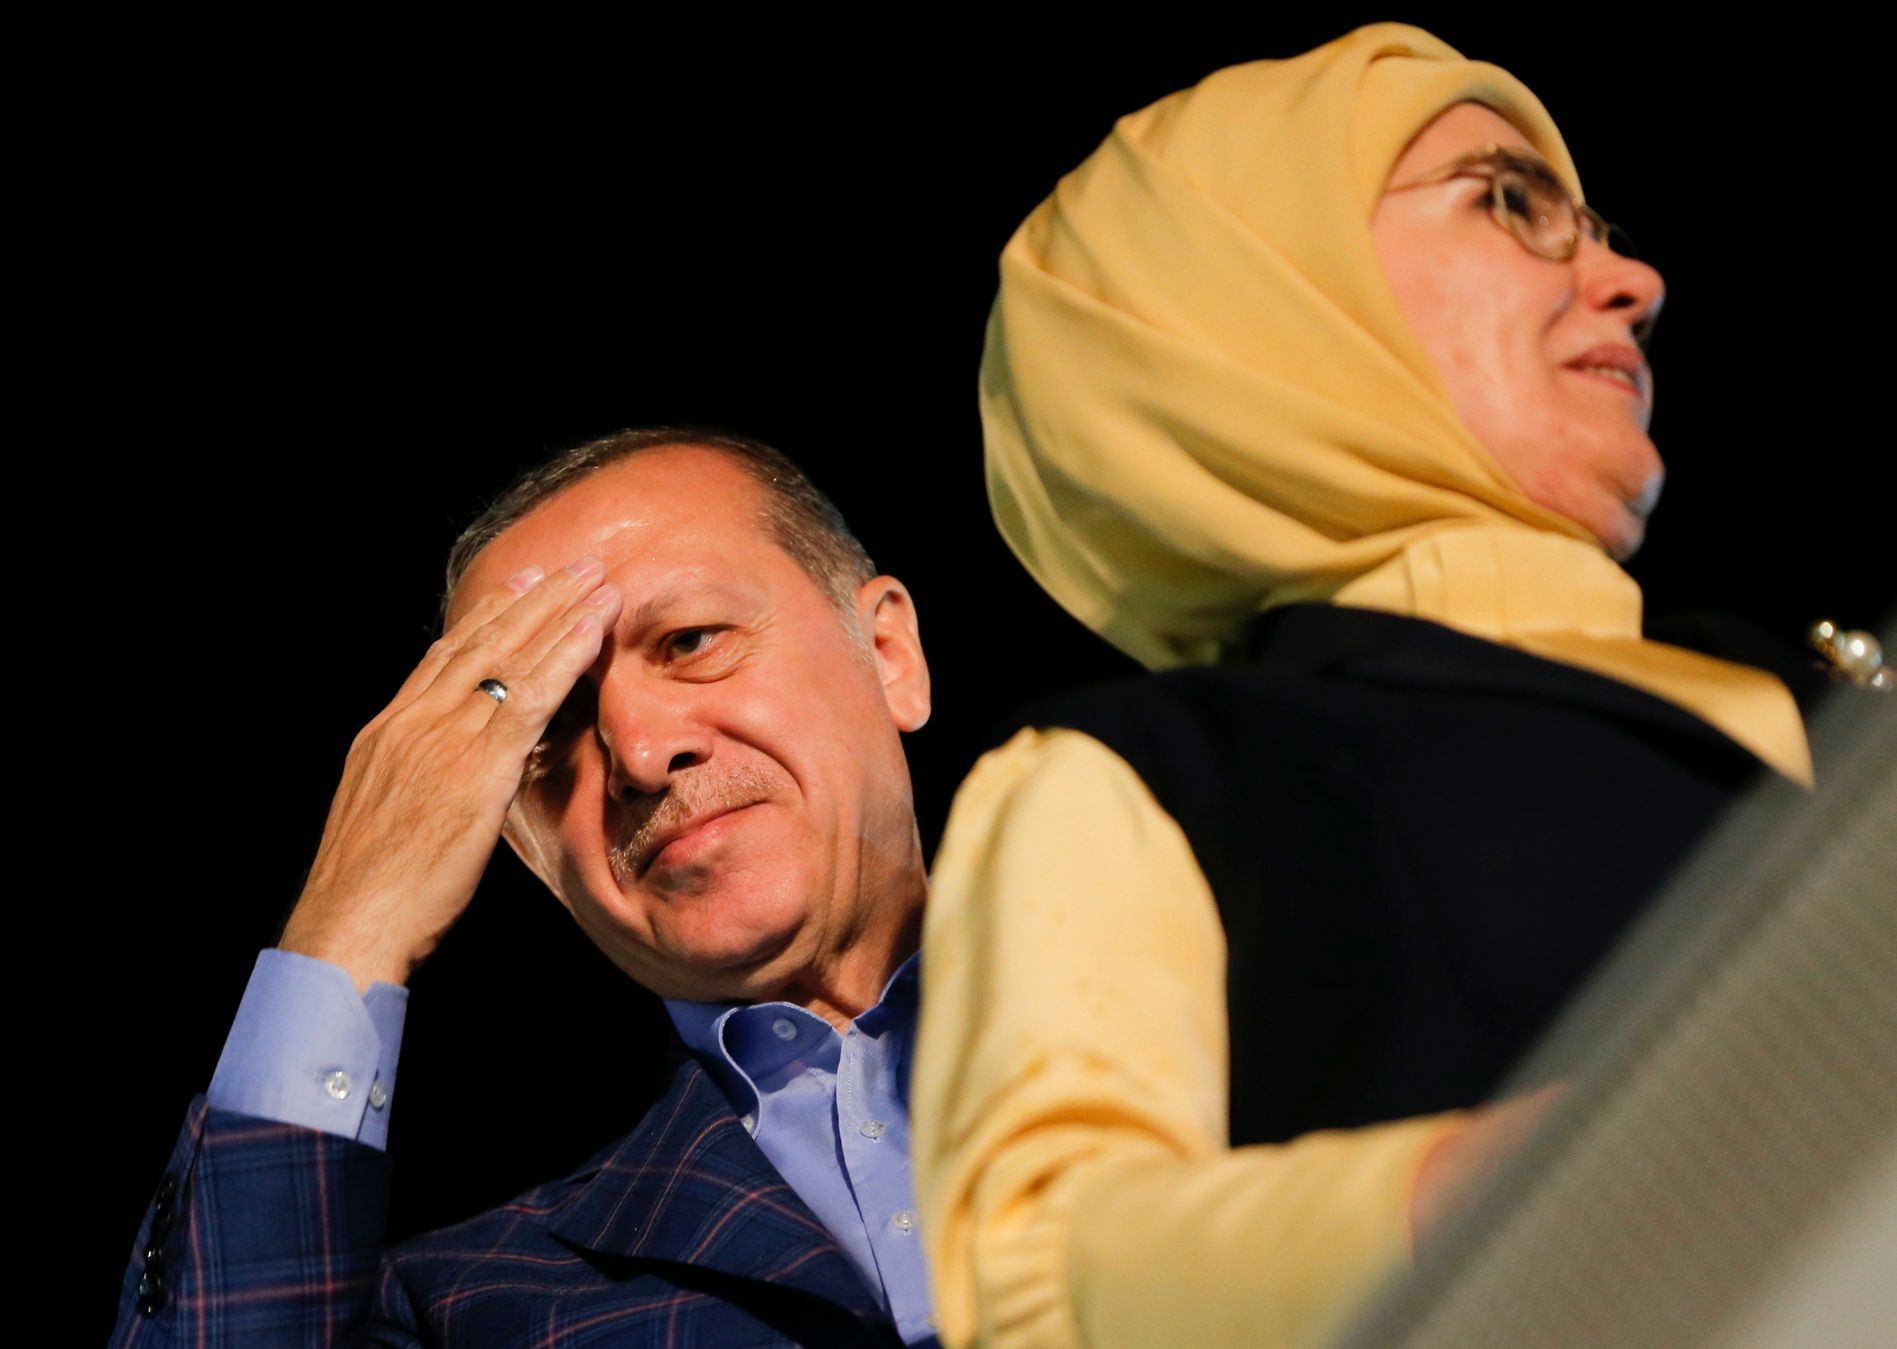 Erdogan s manželkou Emine